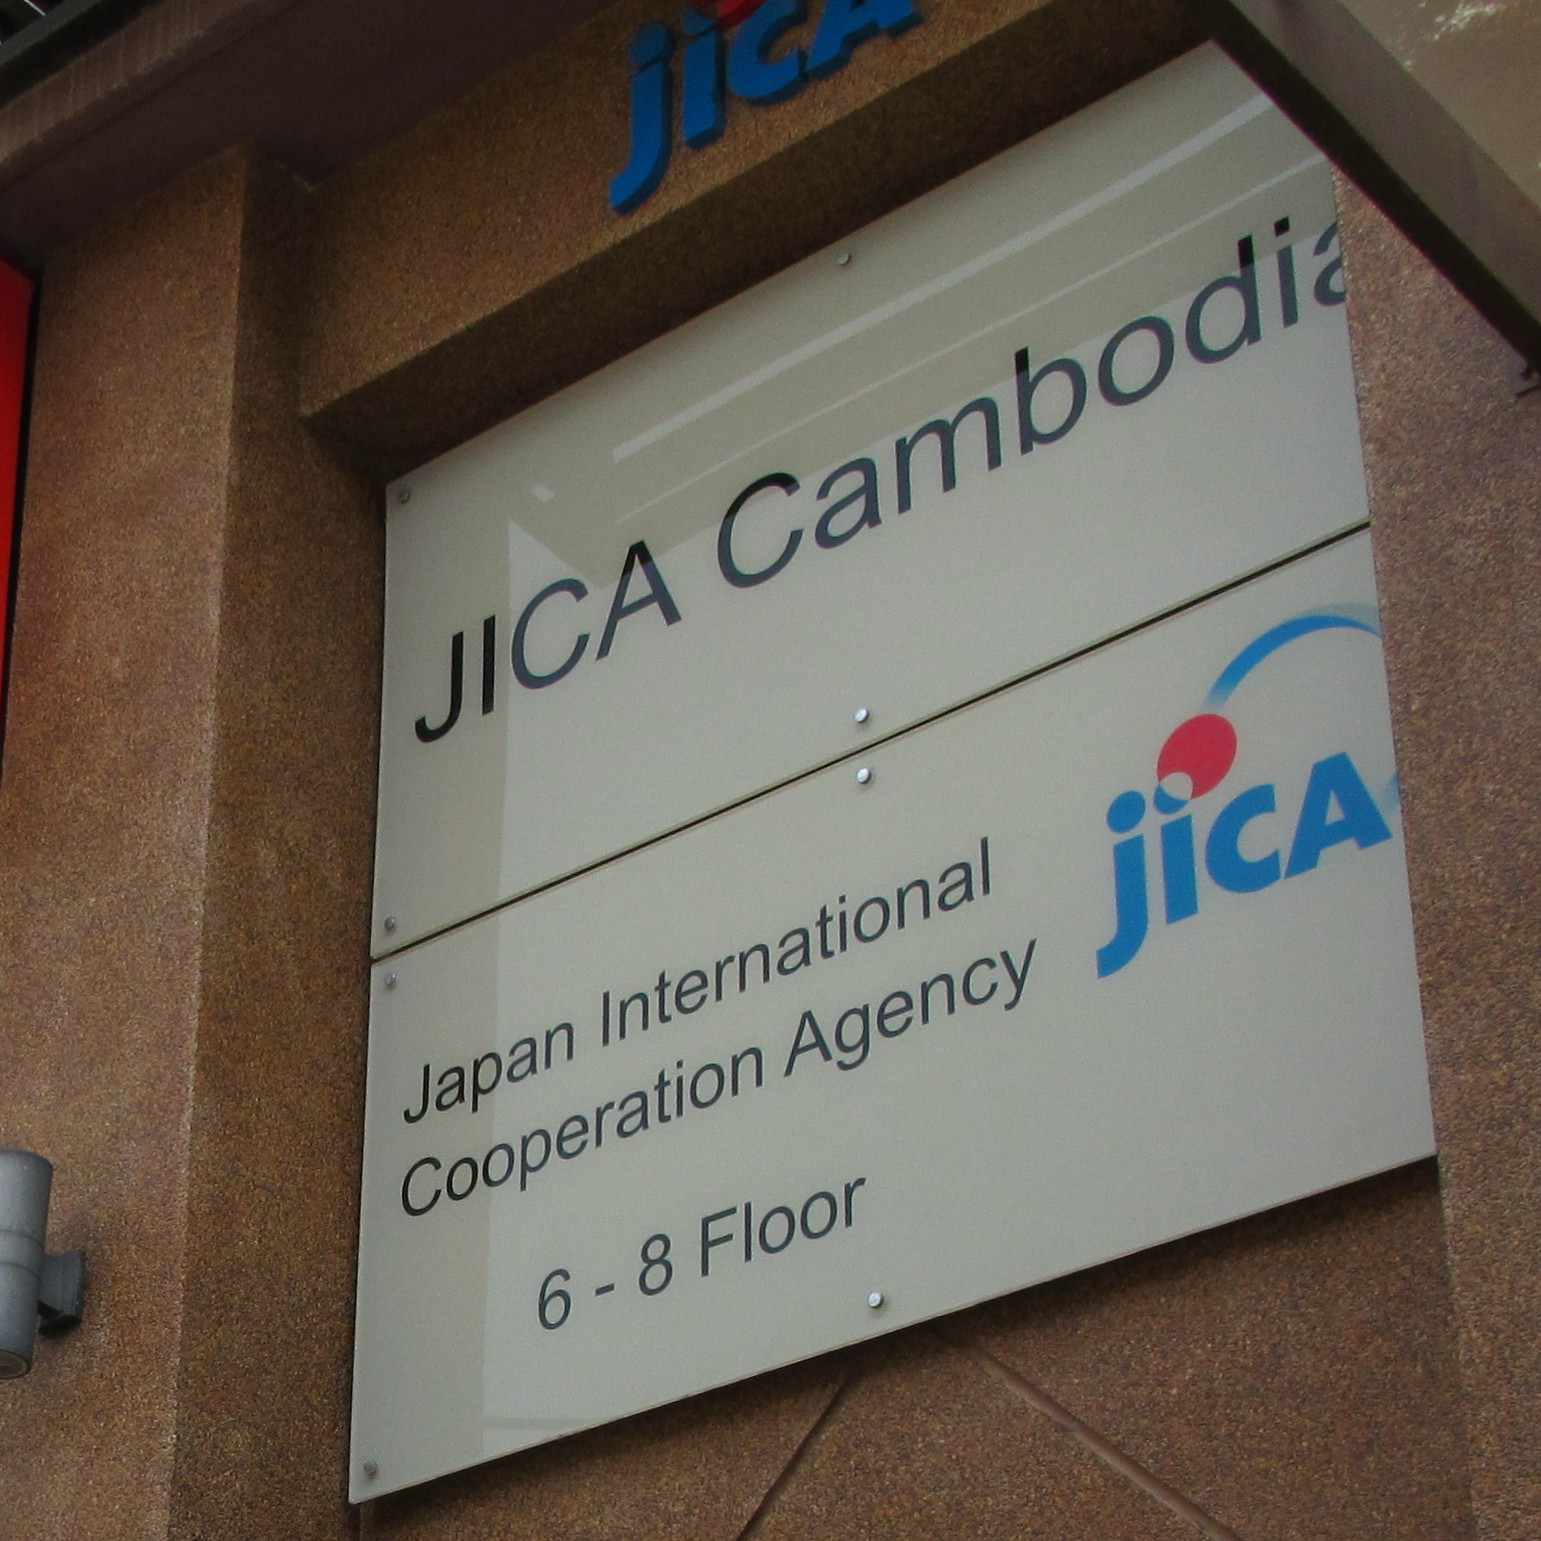 JICAカンボジア事務所